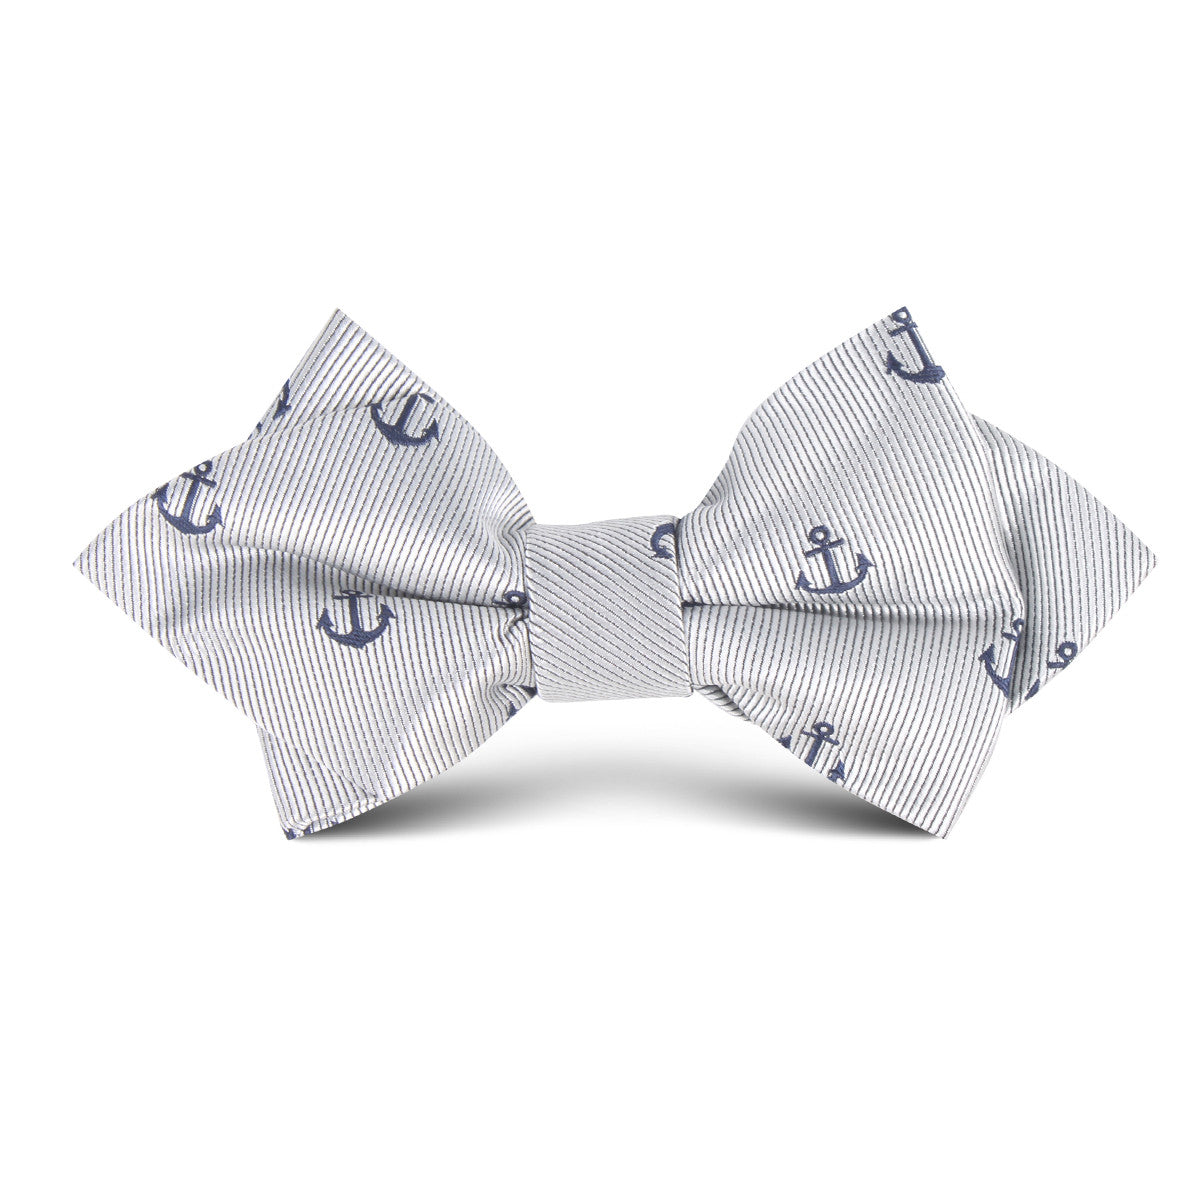 The OTAA Light Grey with Navy Blue Anchors Kids Diamond Bow Tie